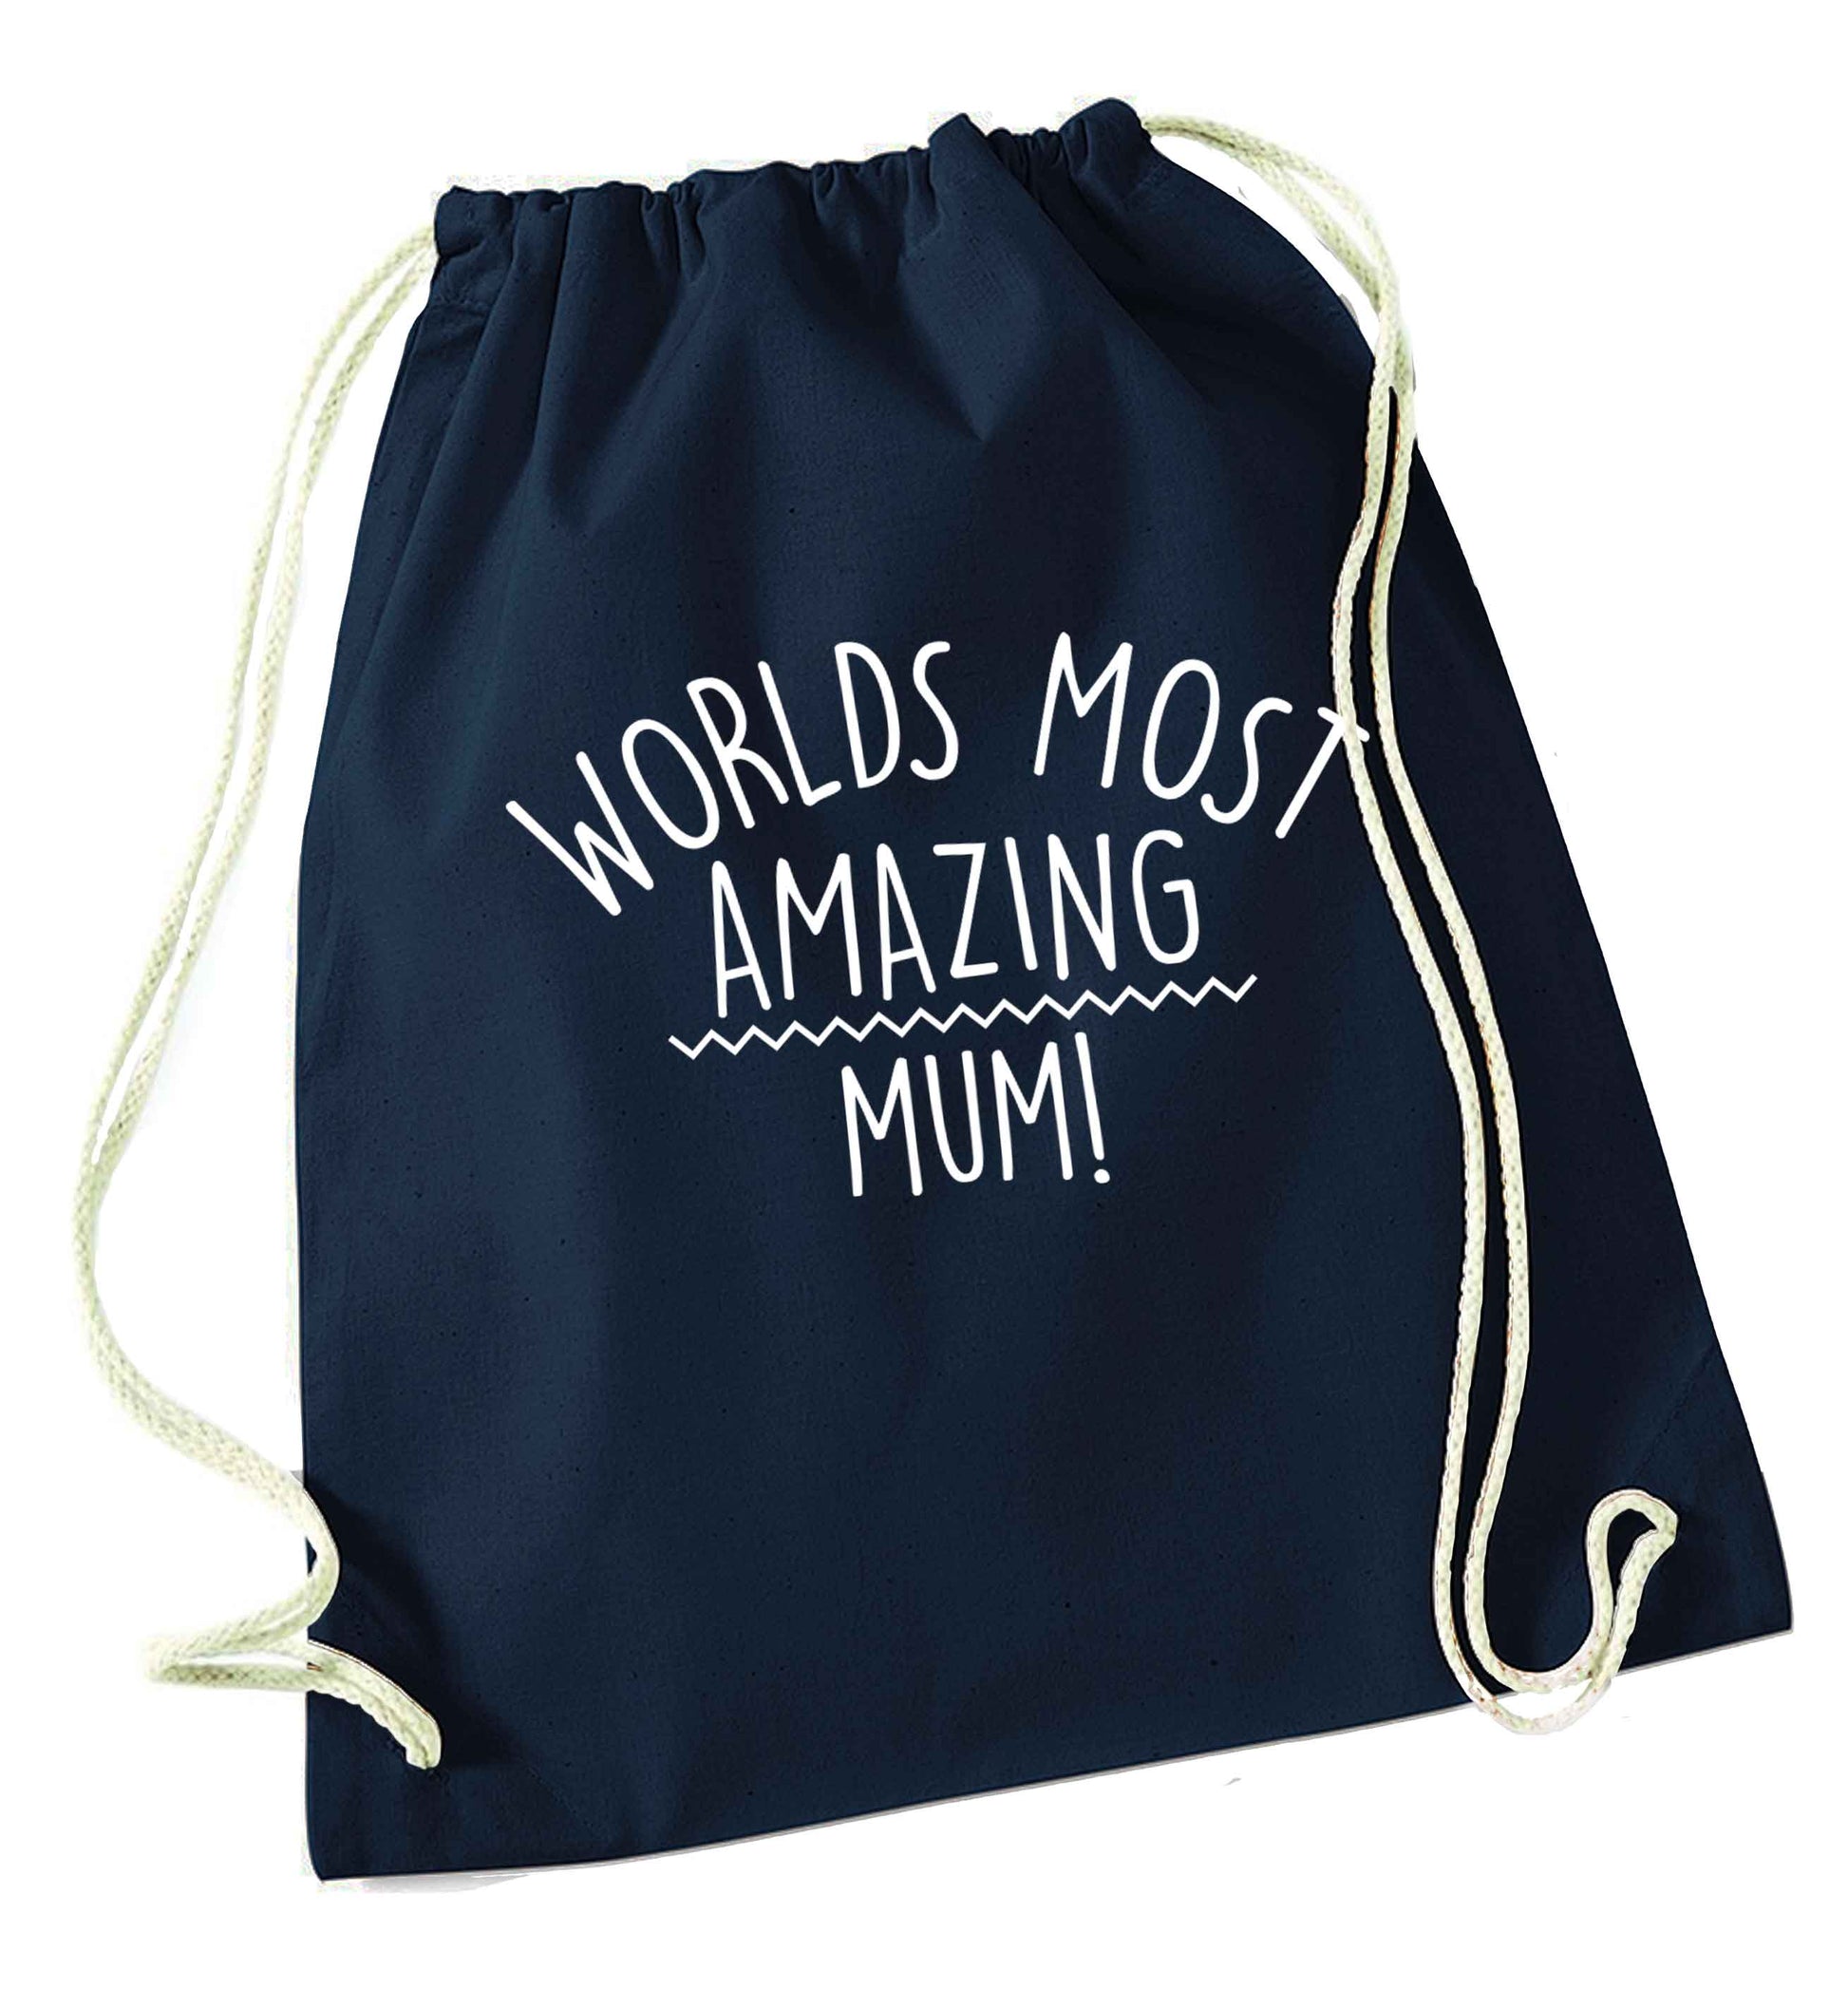 Worlds most amazing mum navy drawstring bag